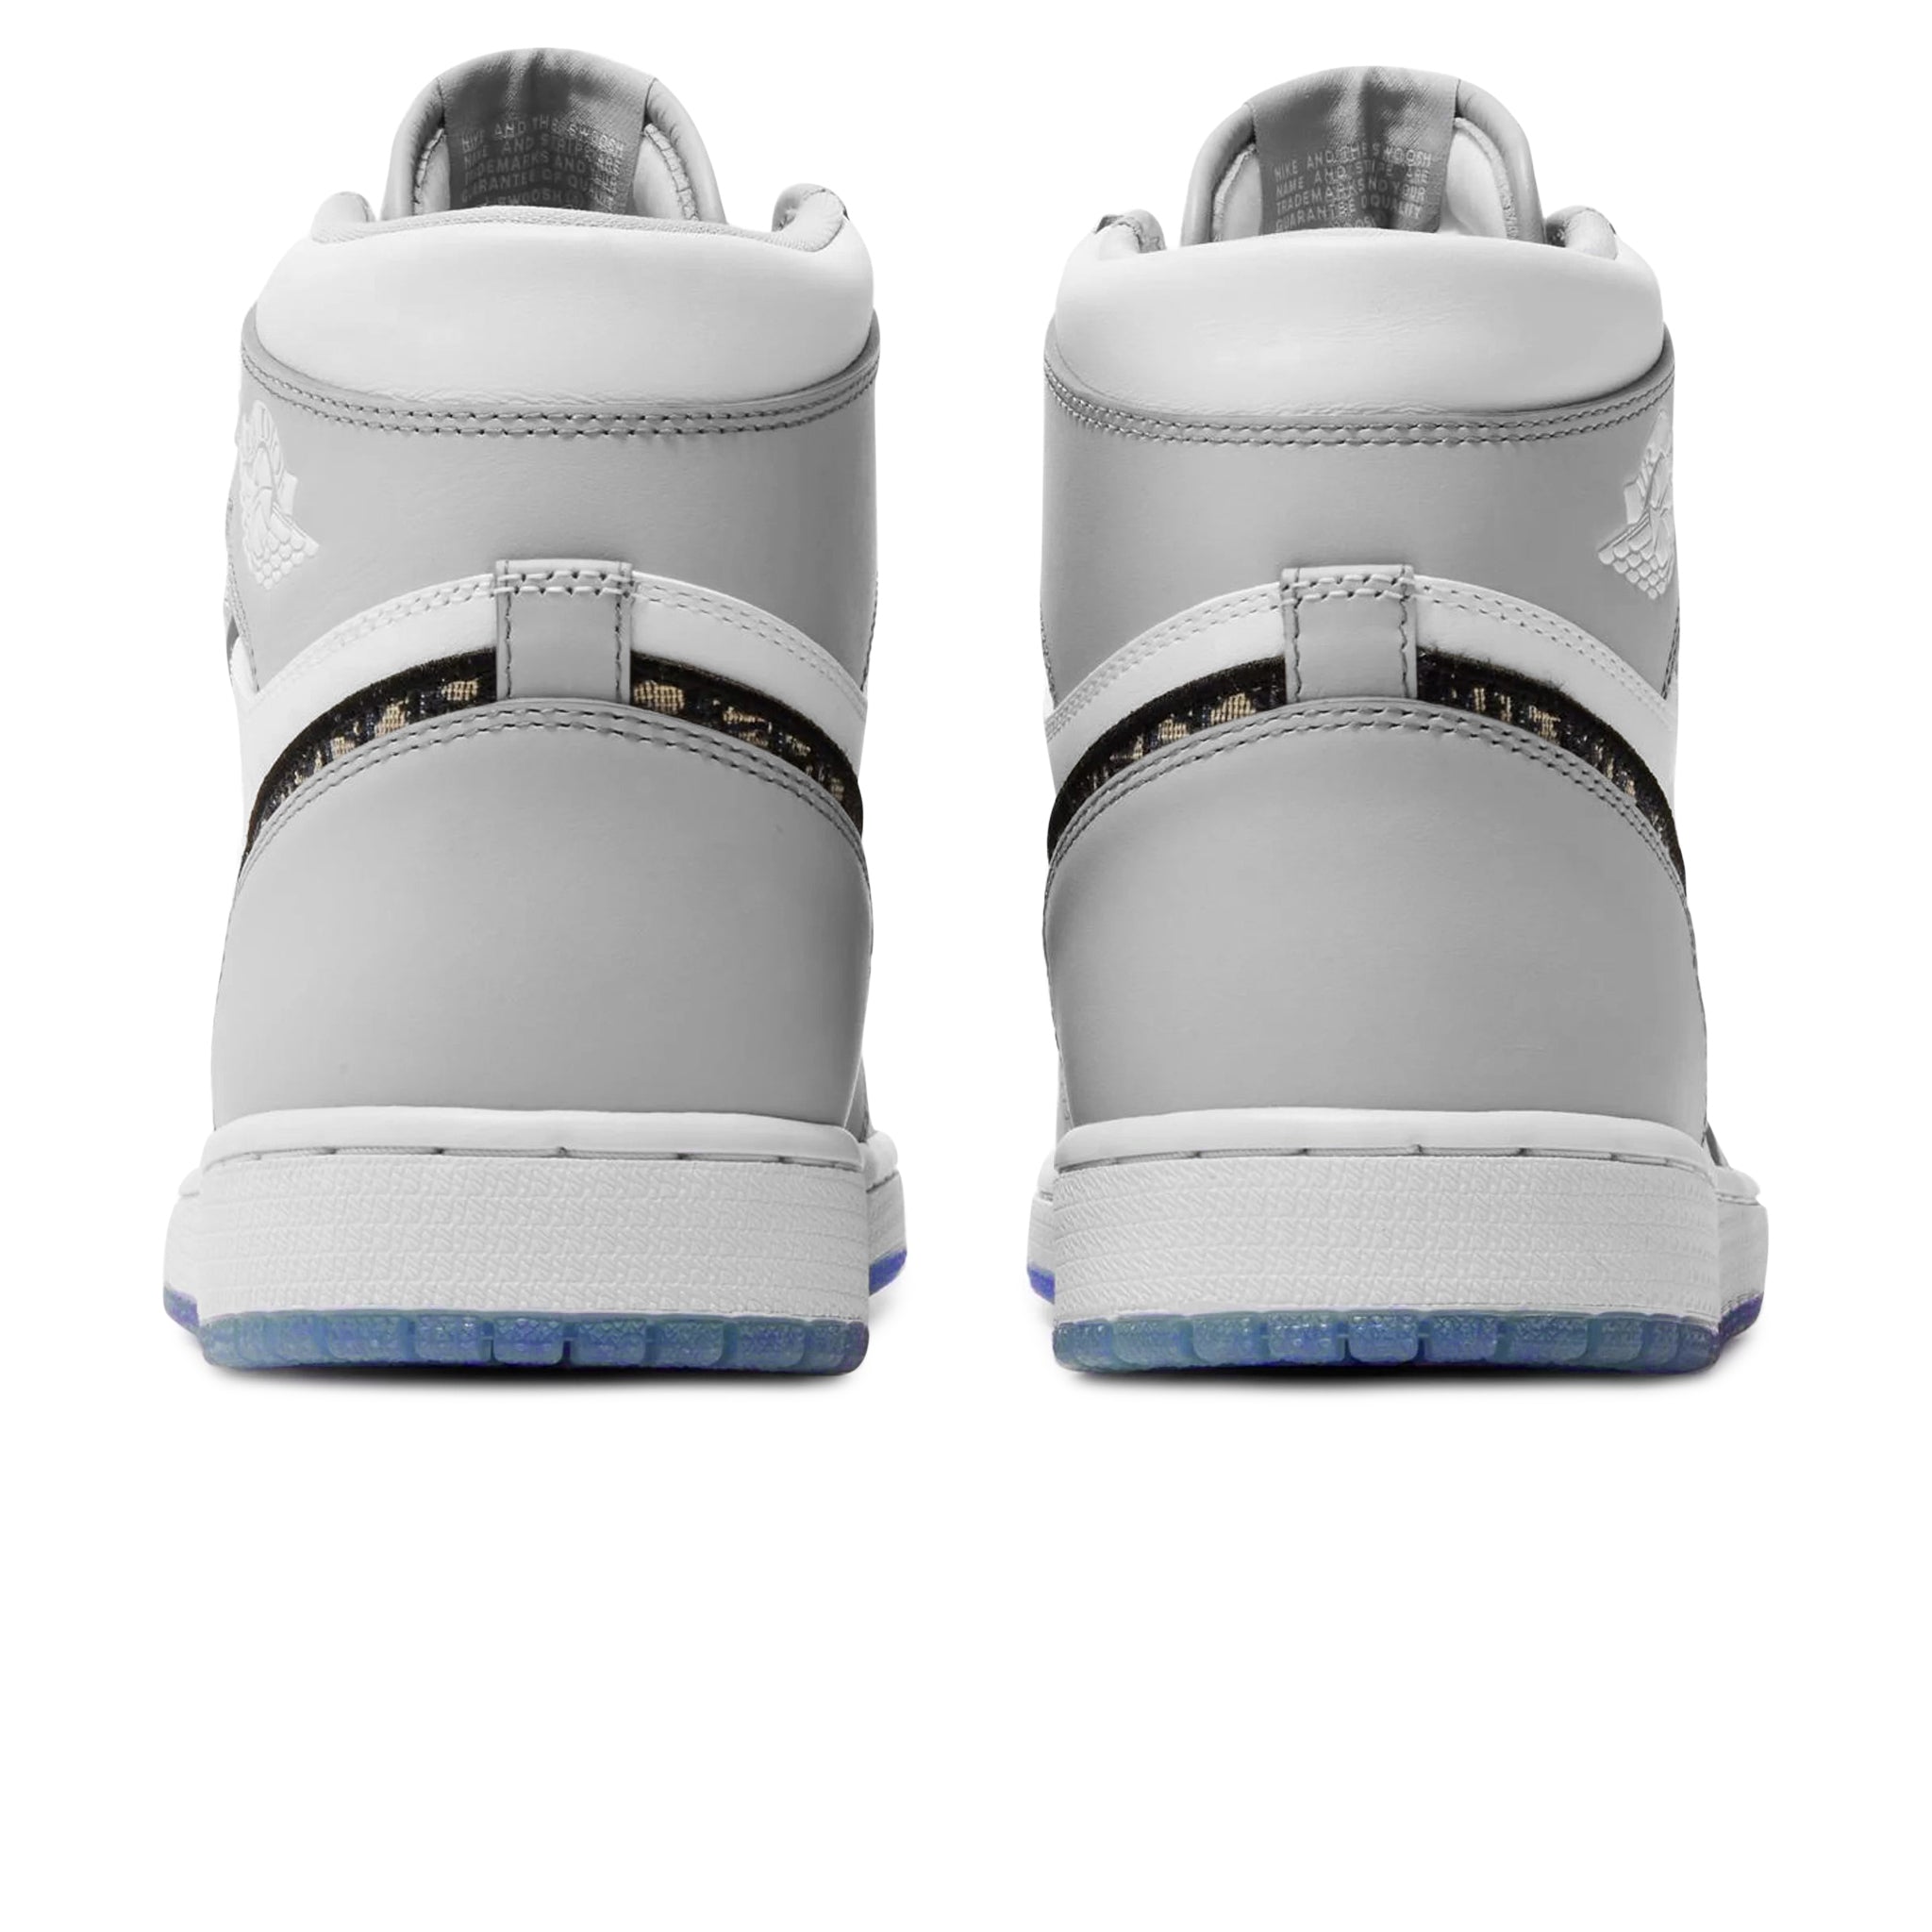 Giày Nike Air Jordan 1 High Dior Rep 11  SALE giảm đến 40